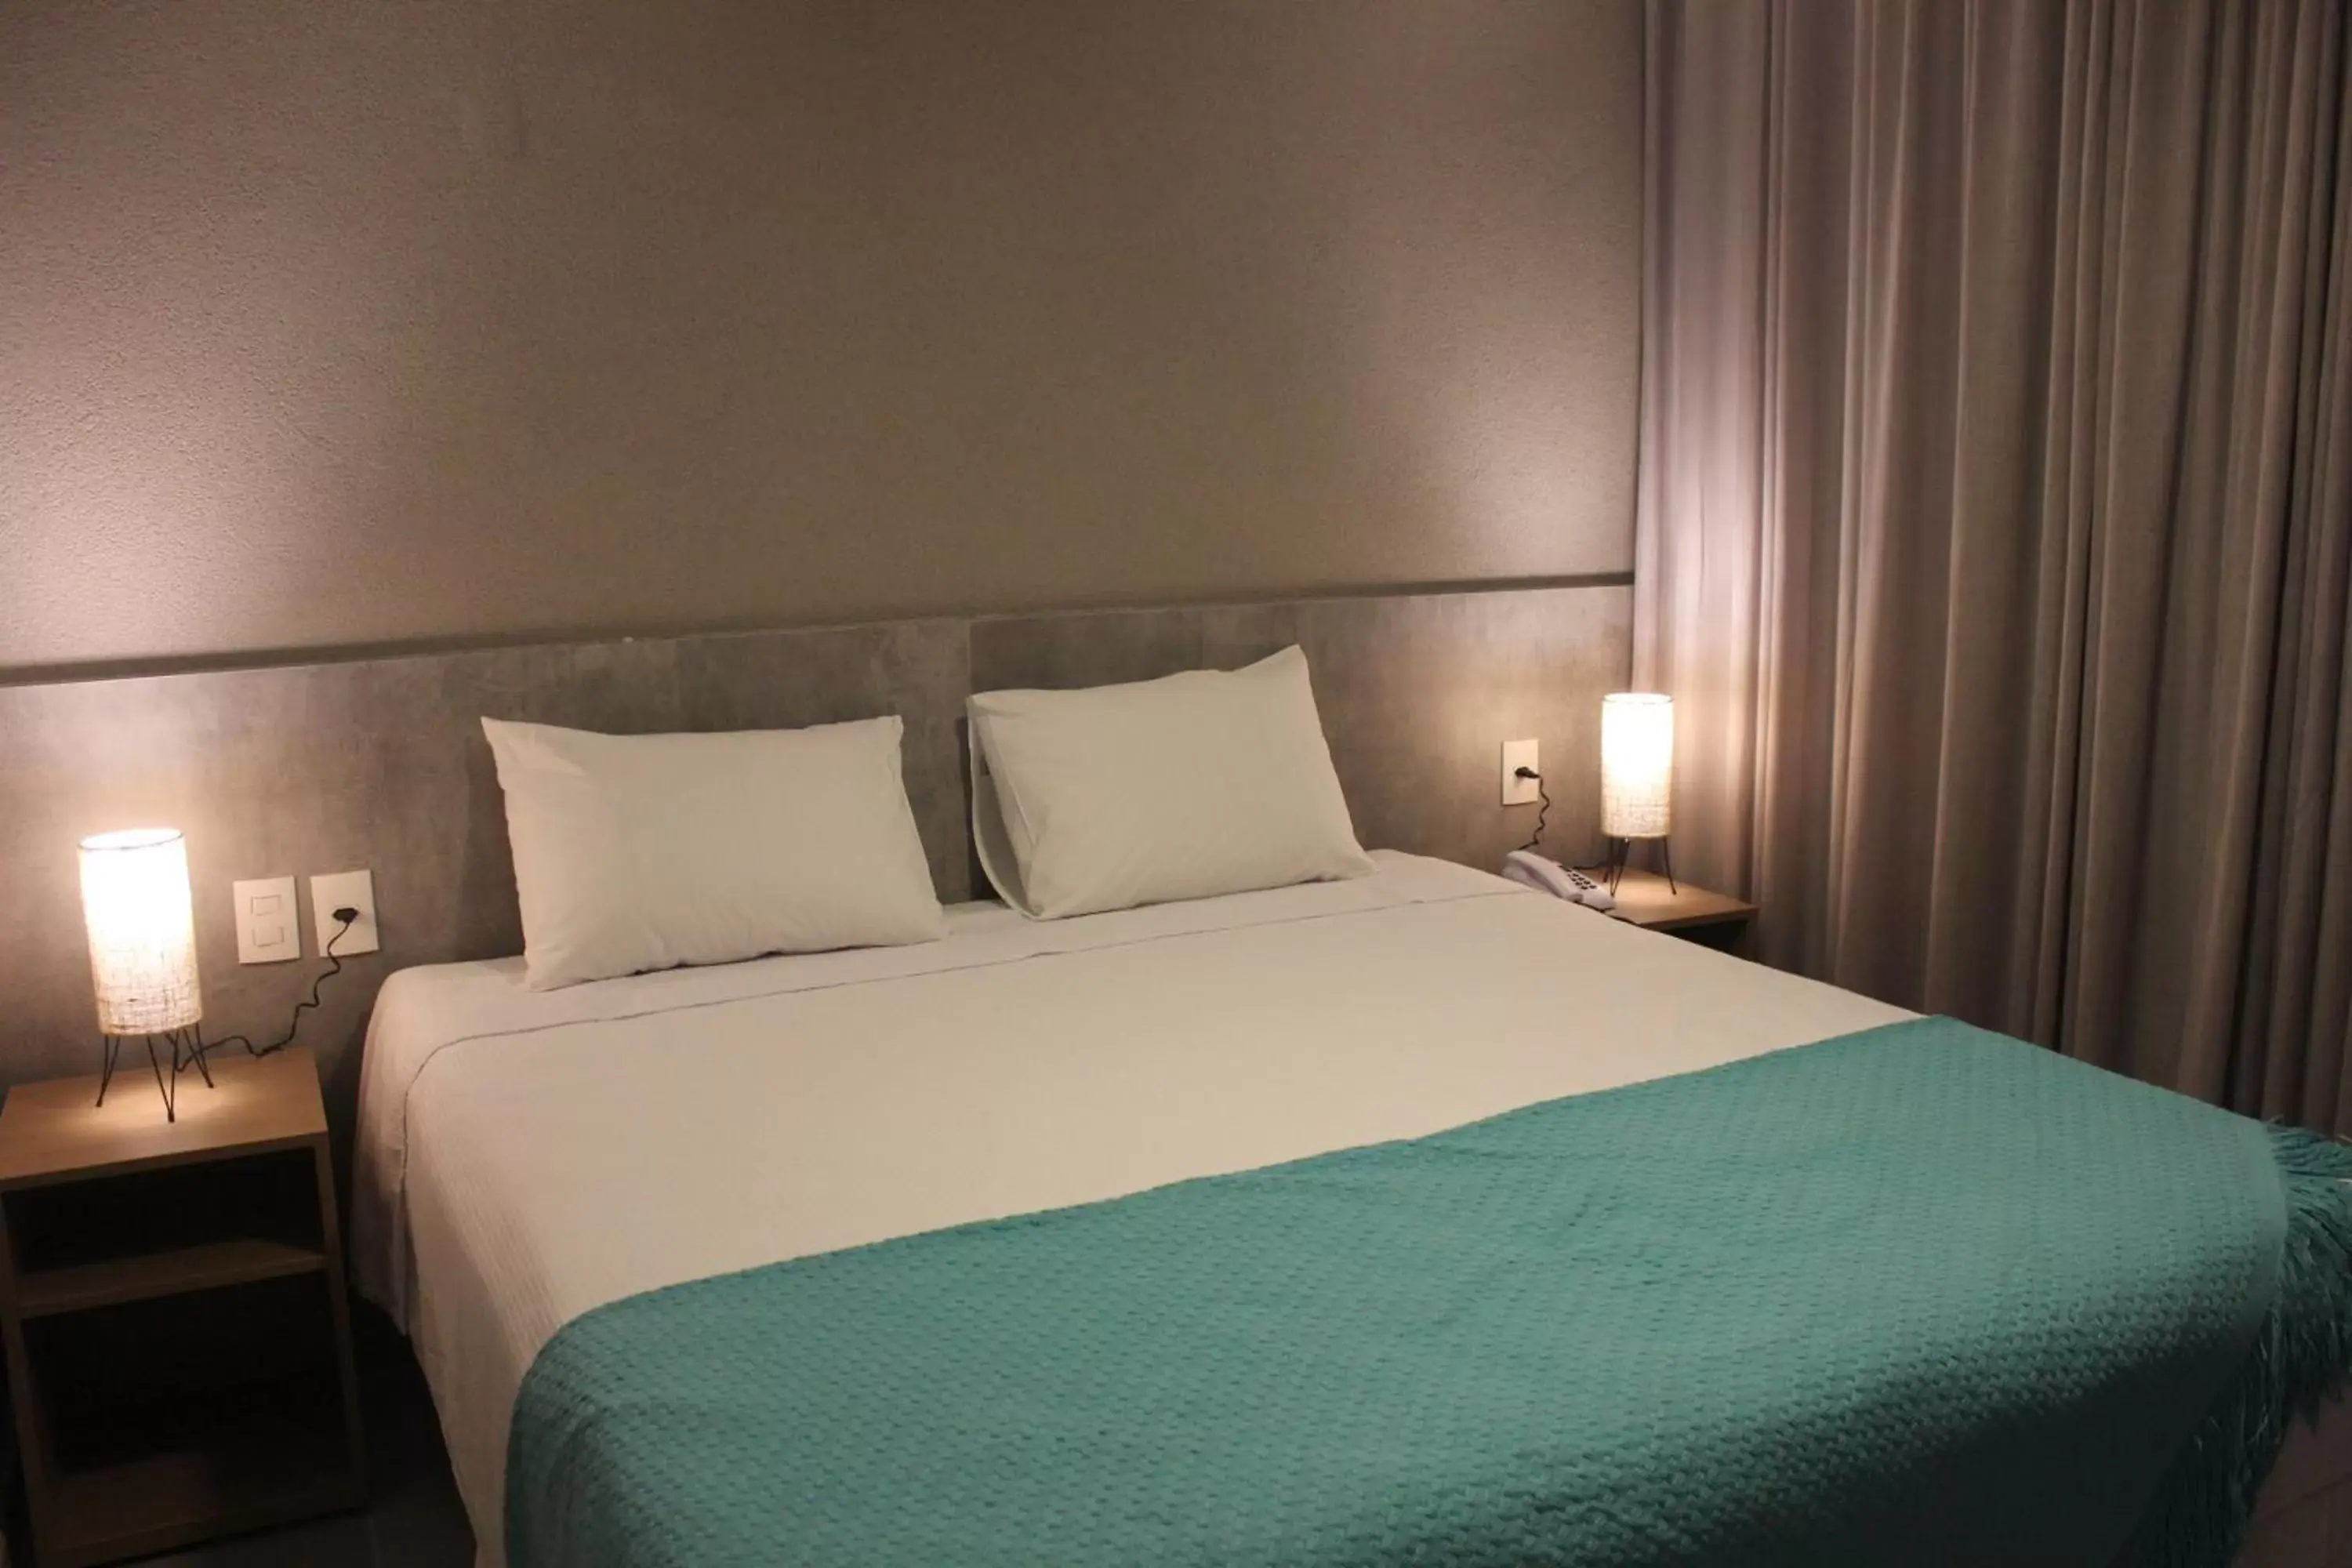 Bedroom, Room Photo in Amenit Hotel